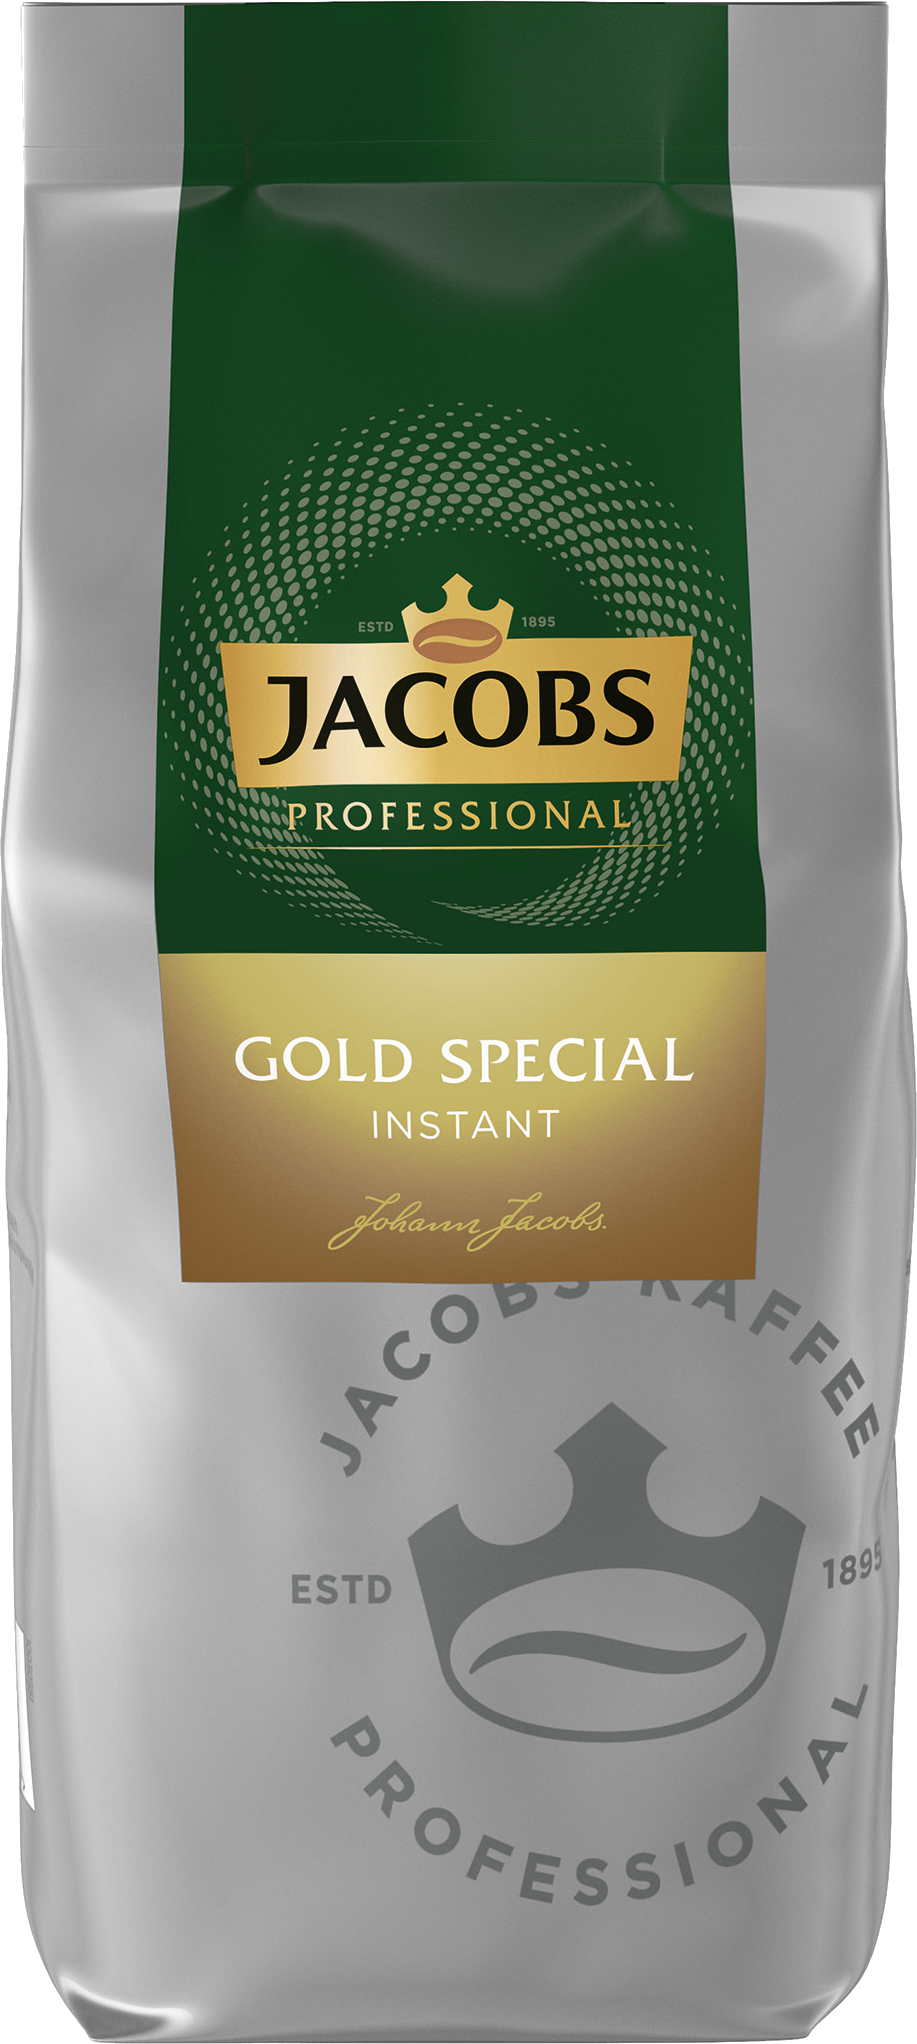 Jacobs Gold spezial gefriergetrocknet